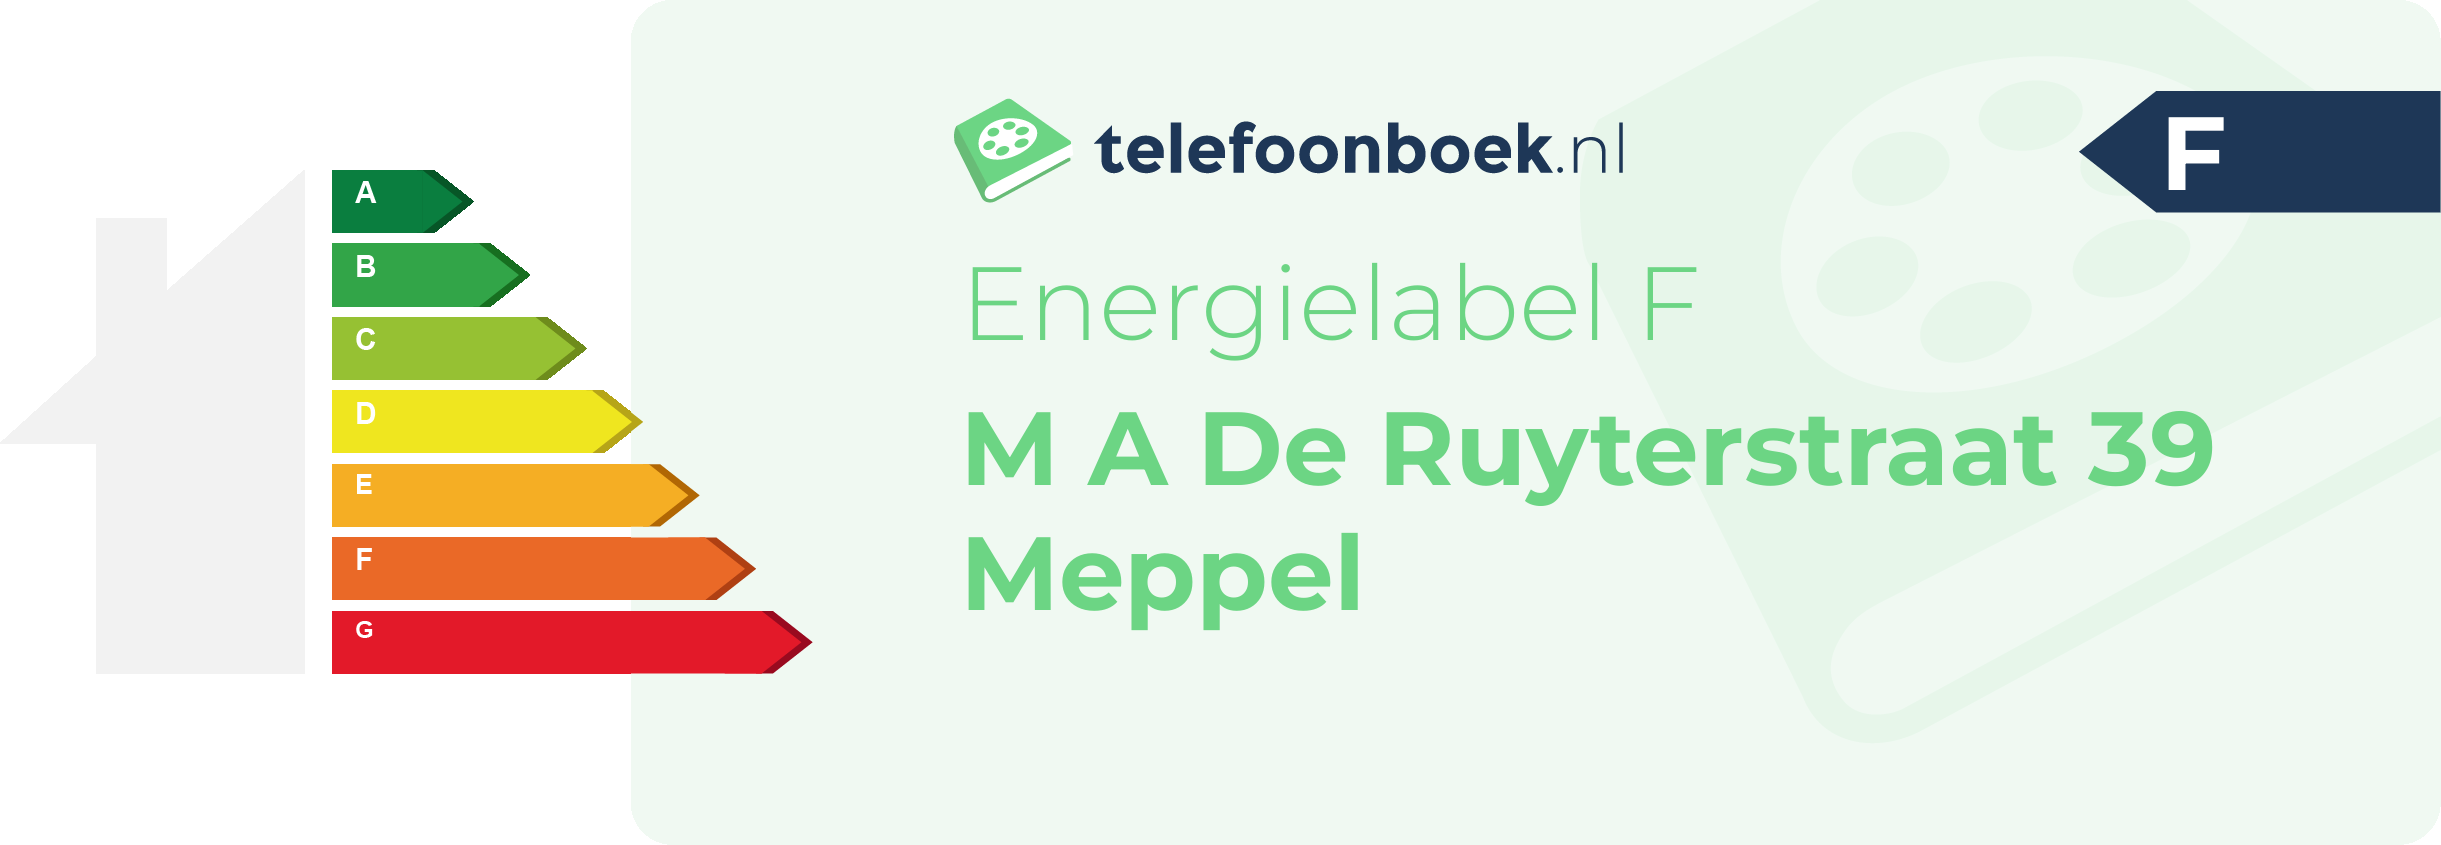 Energielabel M A De Ruyterstraat 39 Meppel